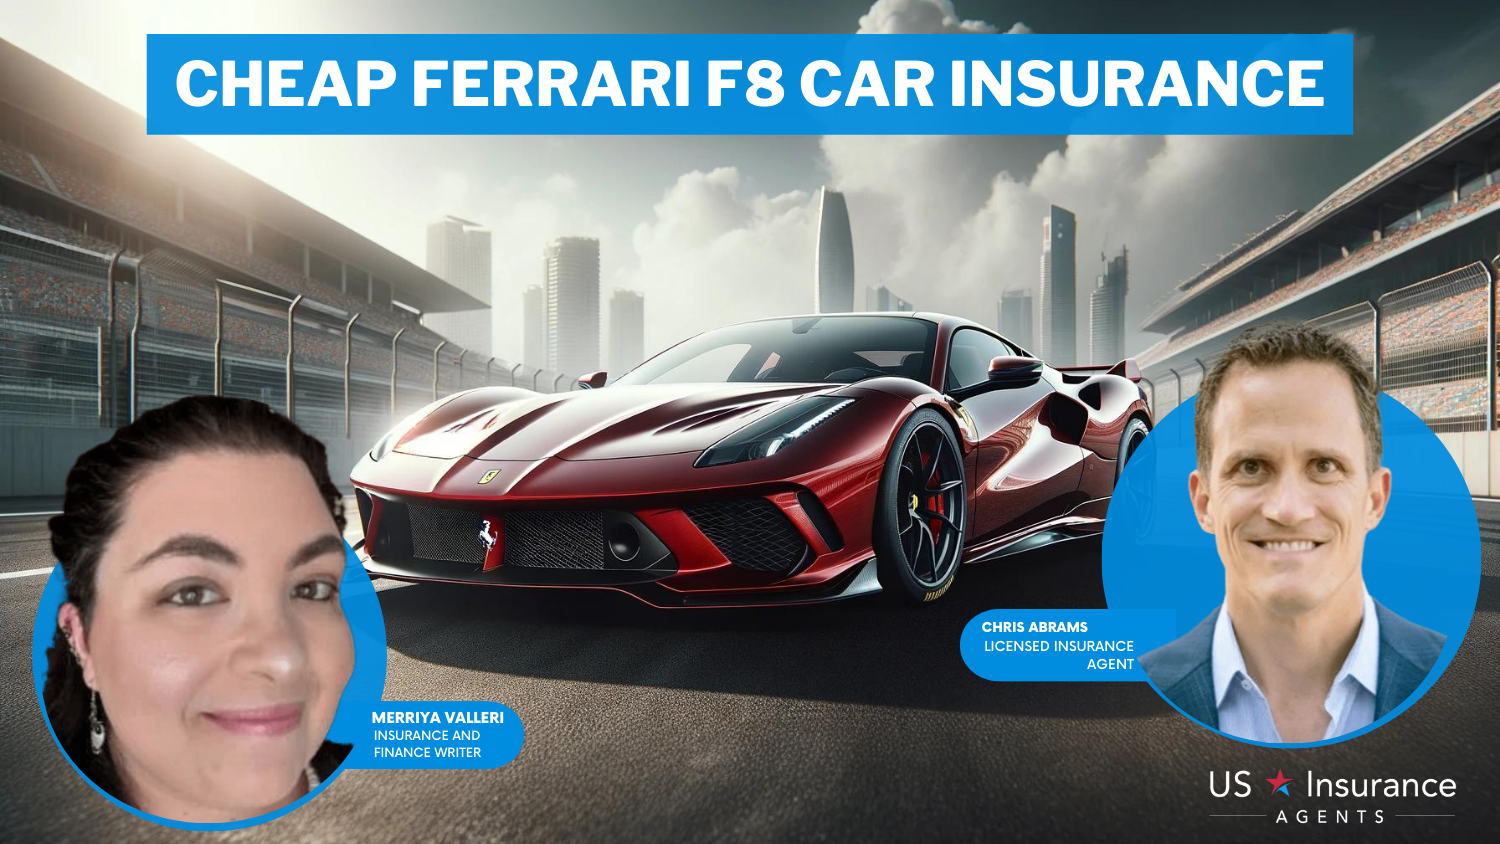 Cheap Ferrari F8 Car Insurance: State Farm, USAA, and Allstate